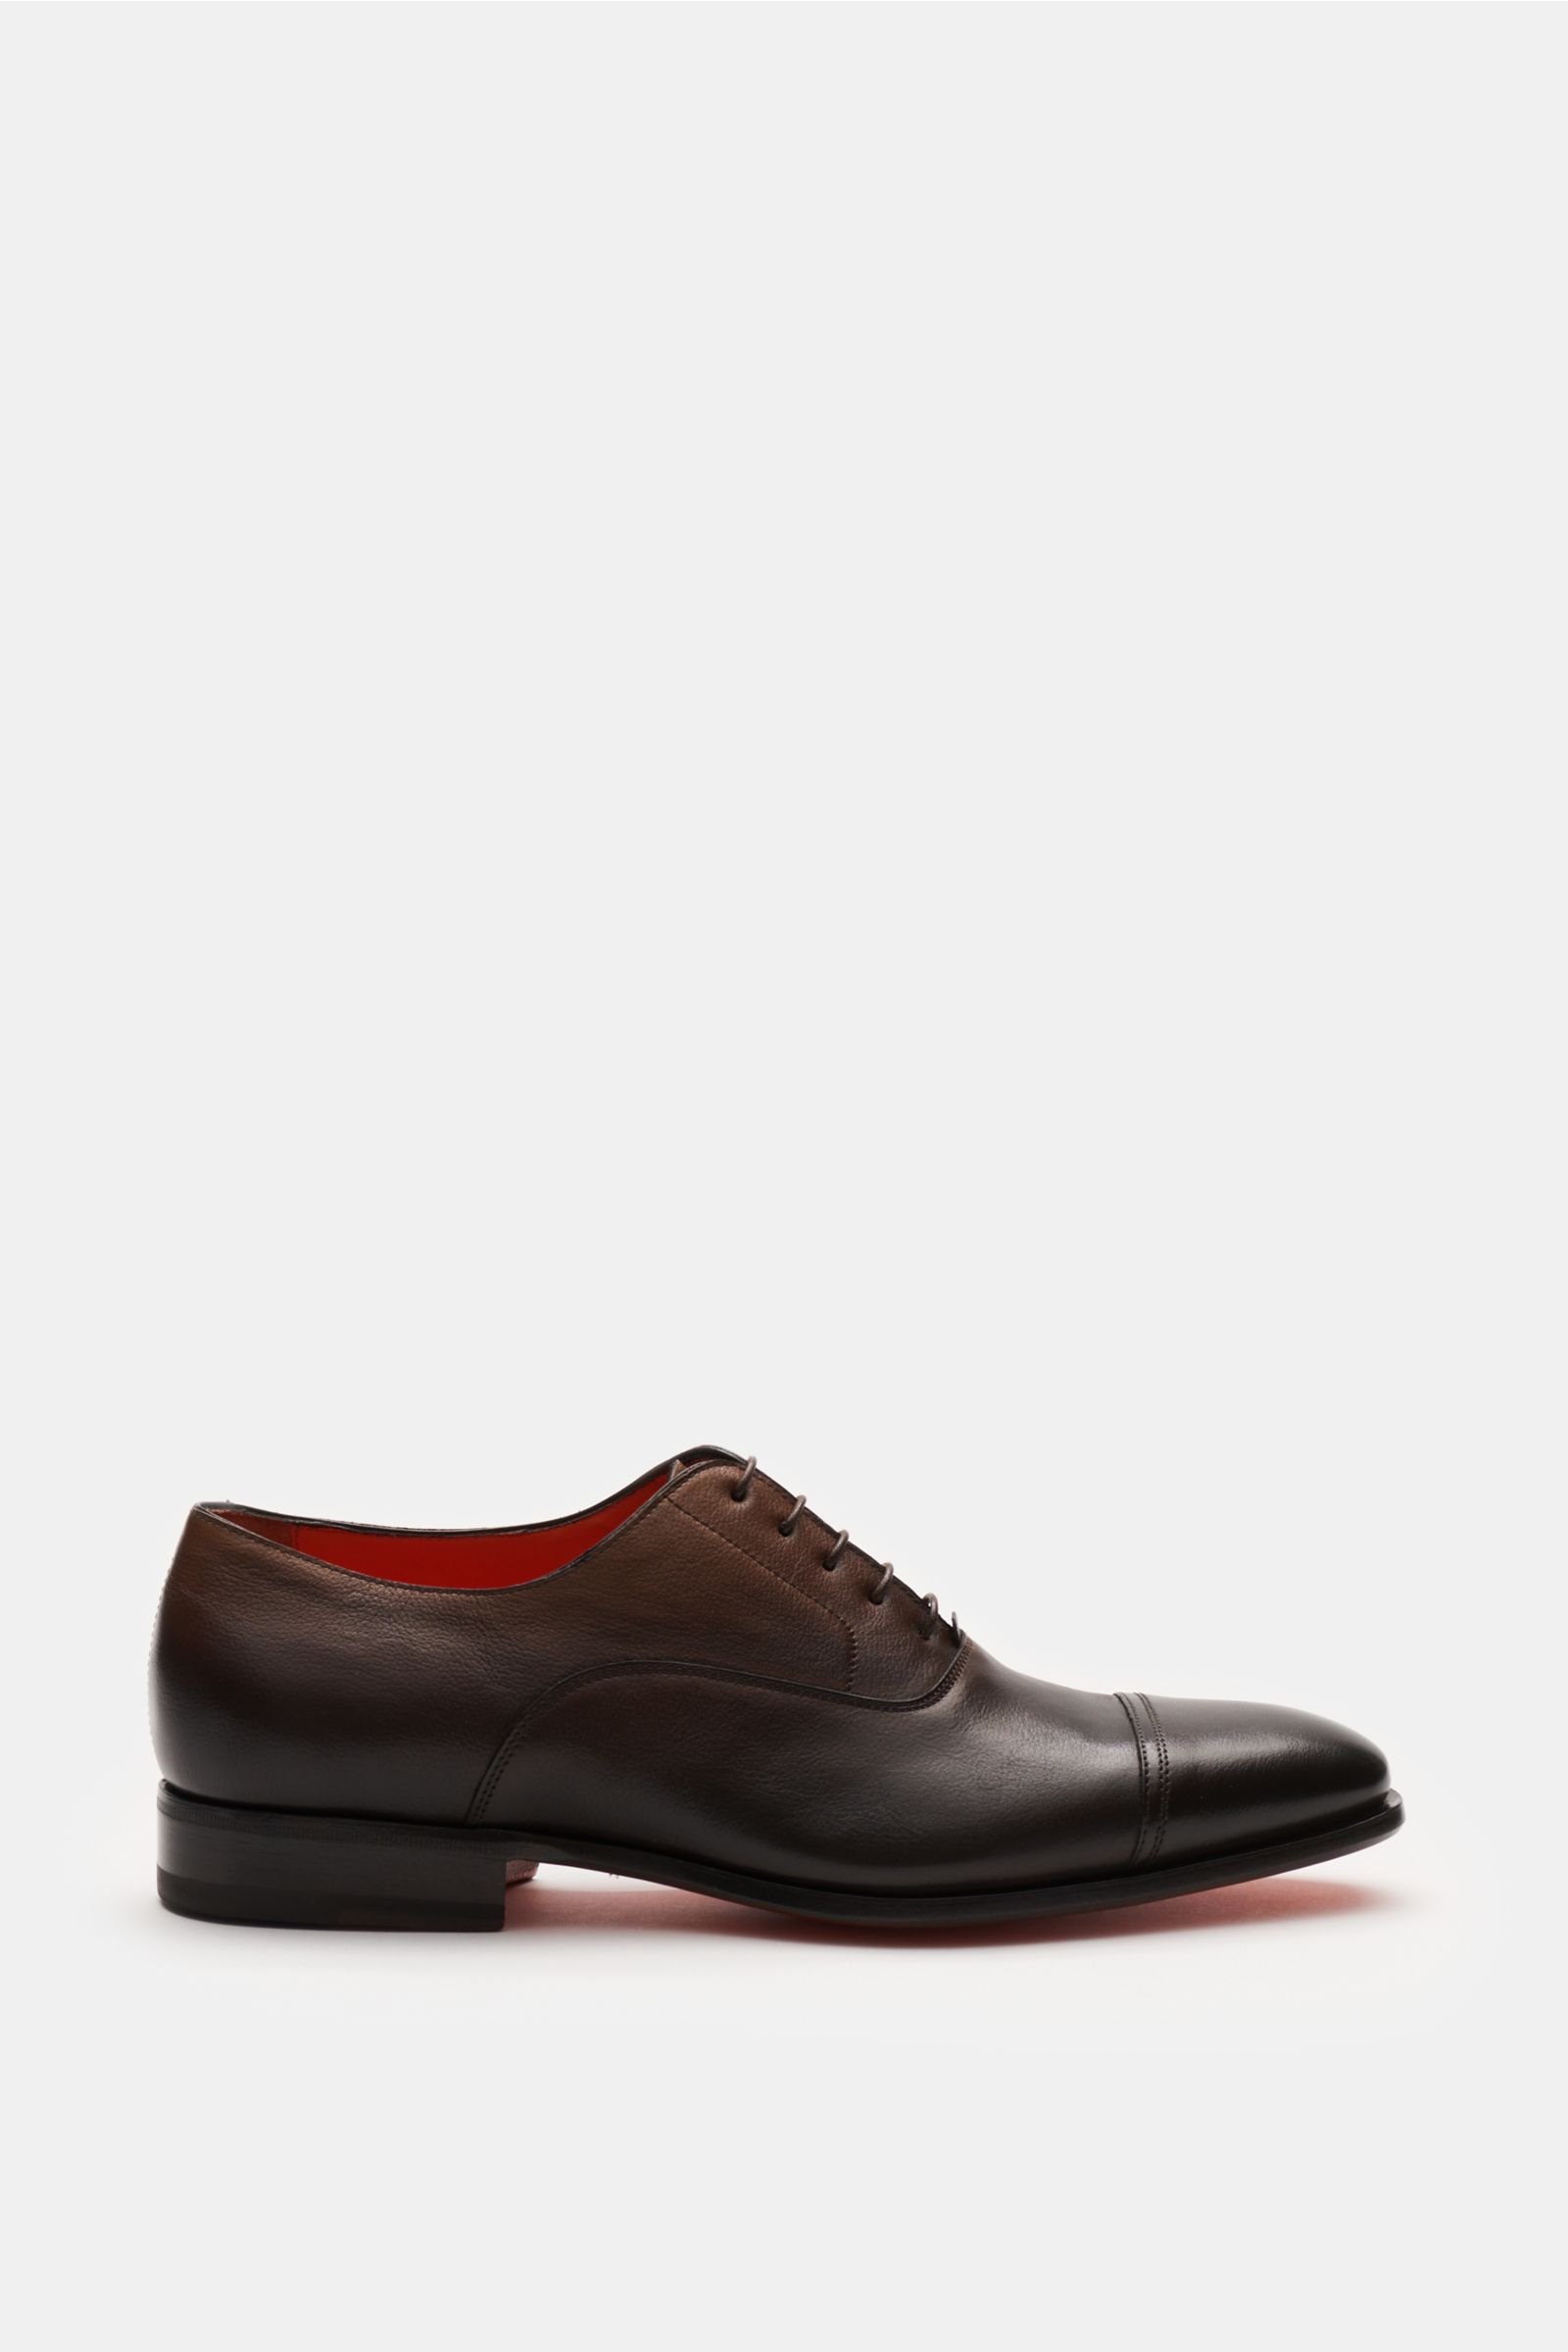 SANTONI Oxford shoes dark brown | BRAUN Hamburg